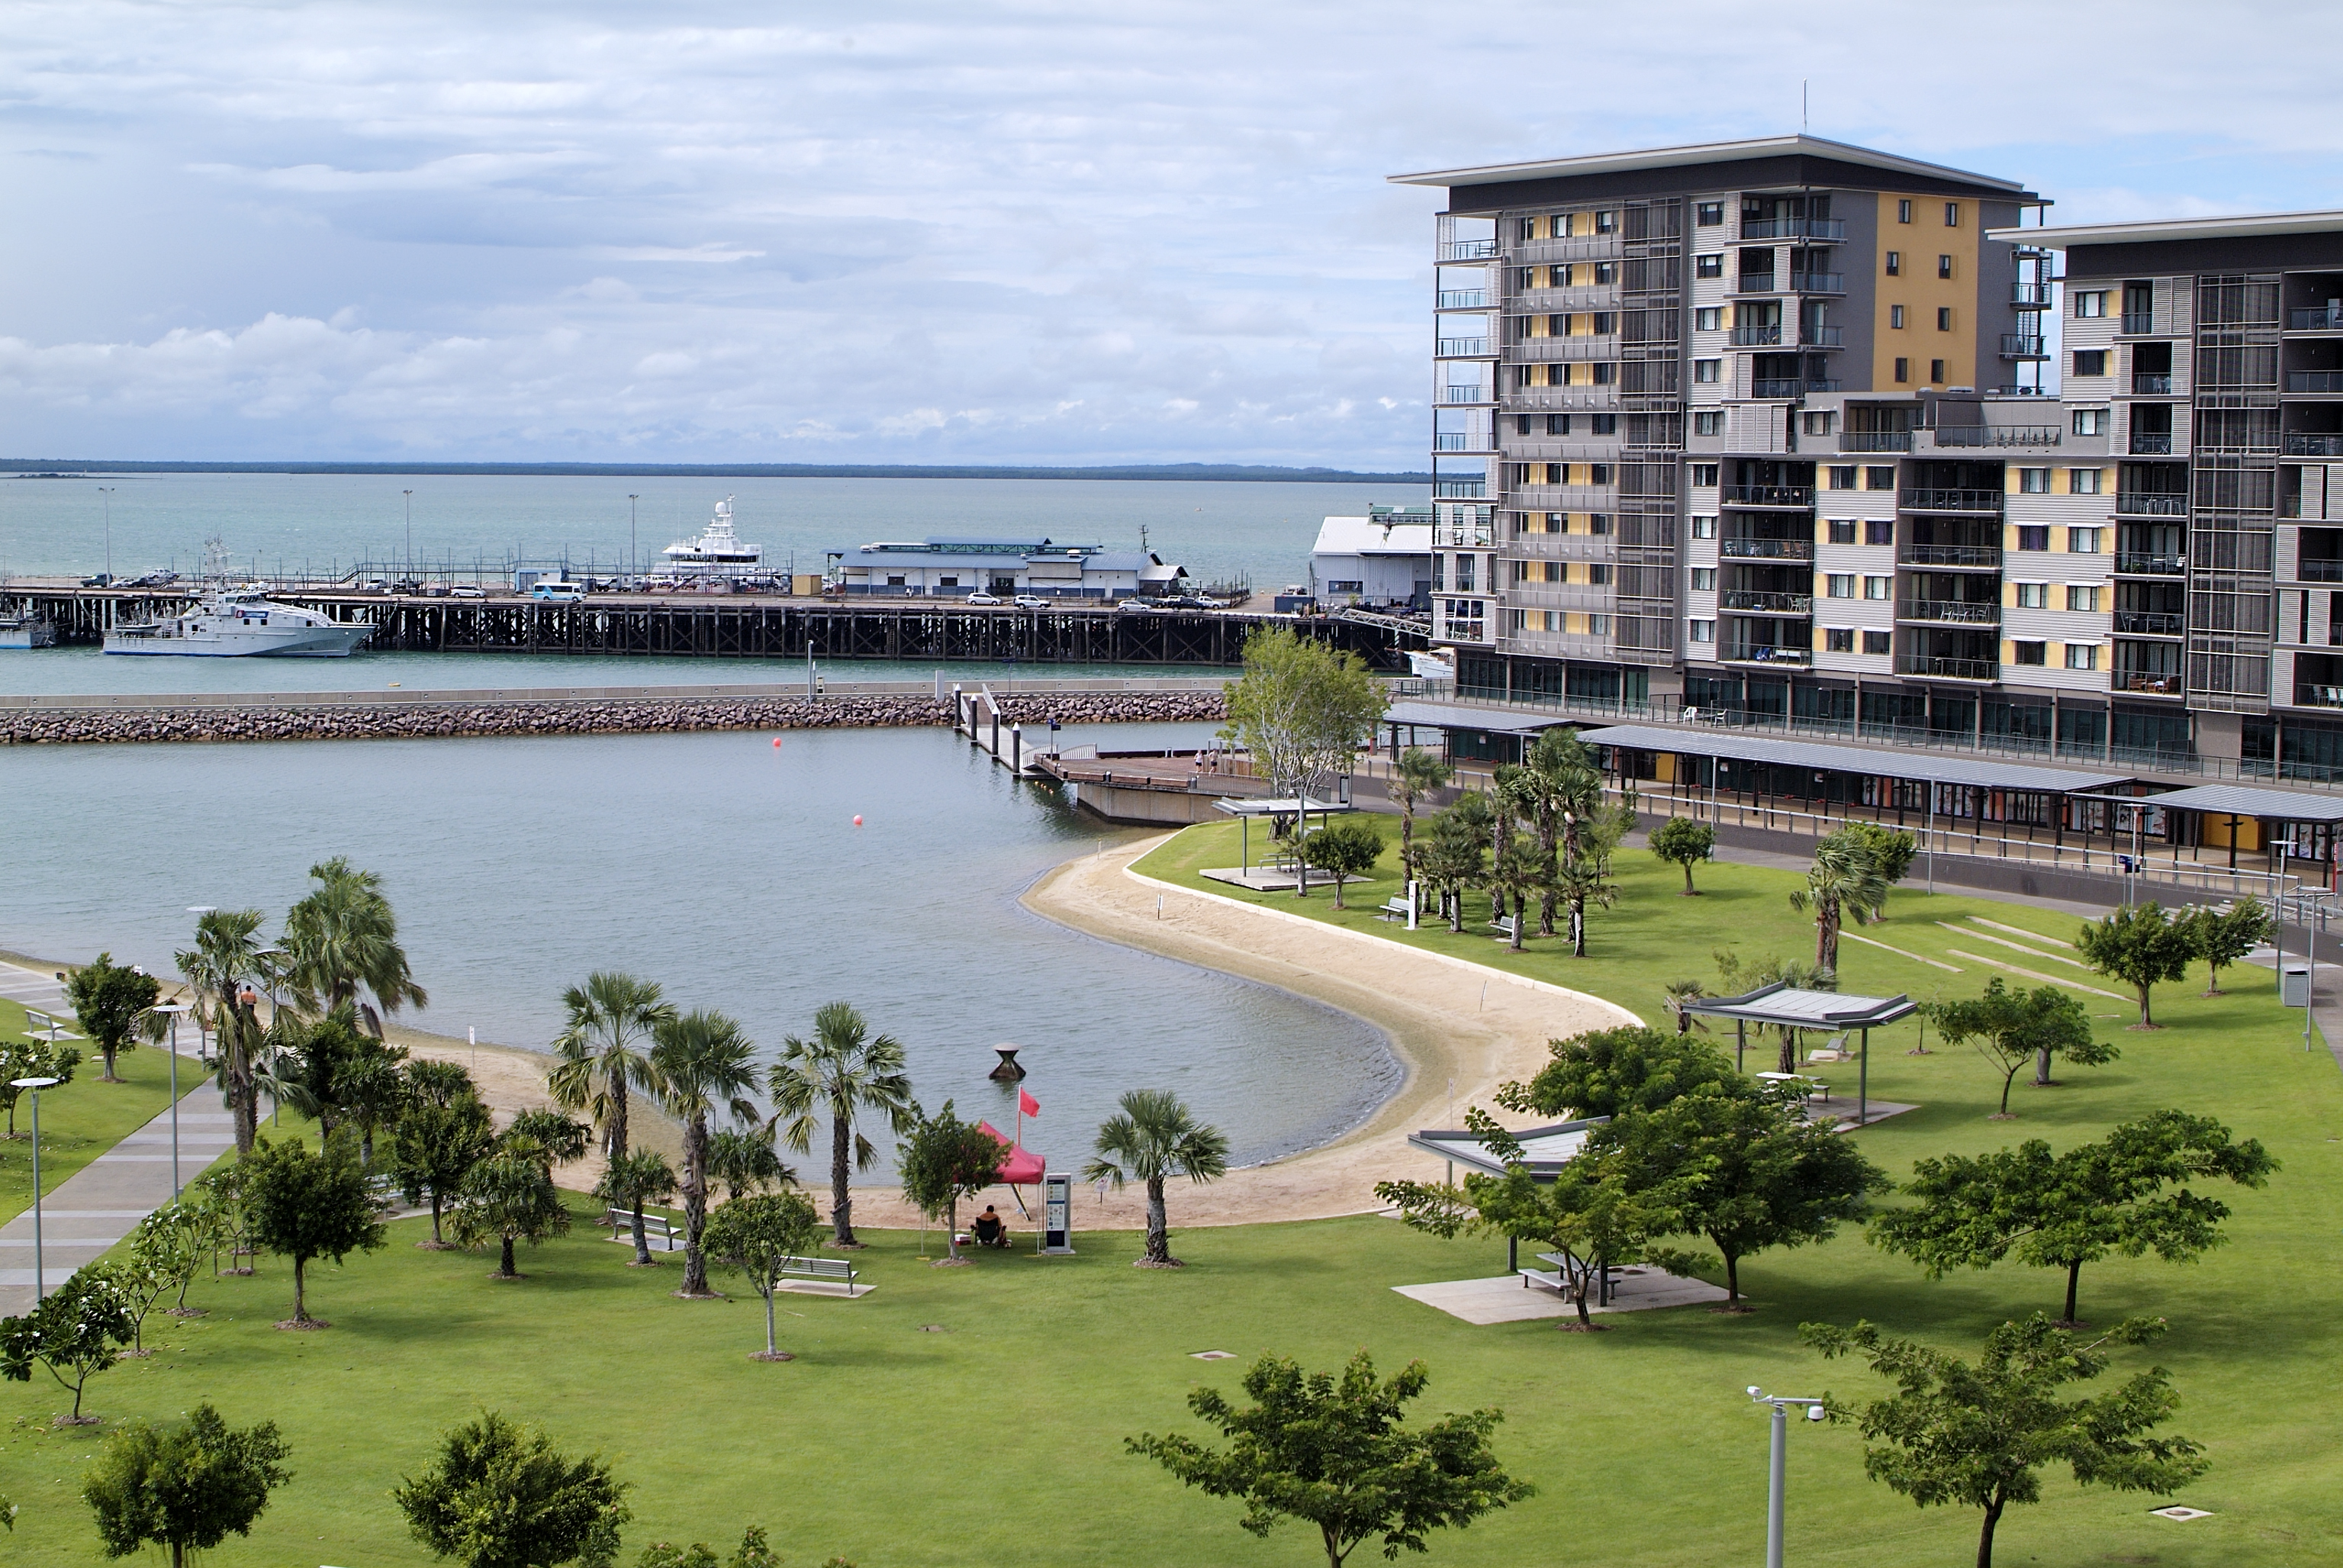 Australia, Homes On Recreation Area Waterfront Precinct In Darwin